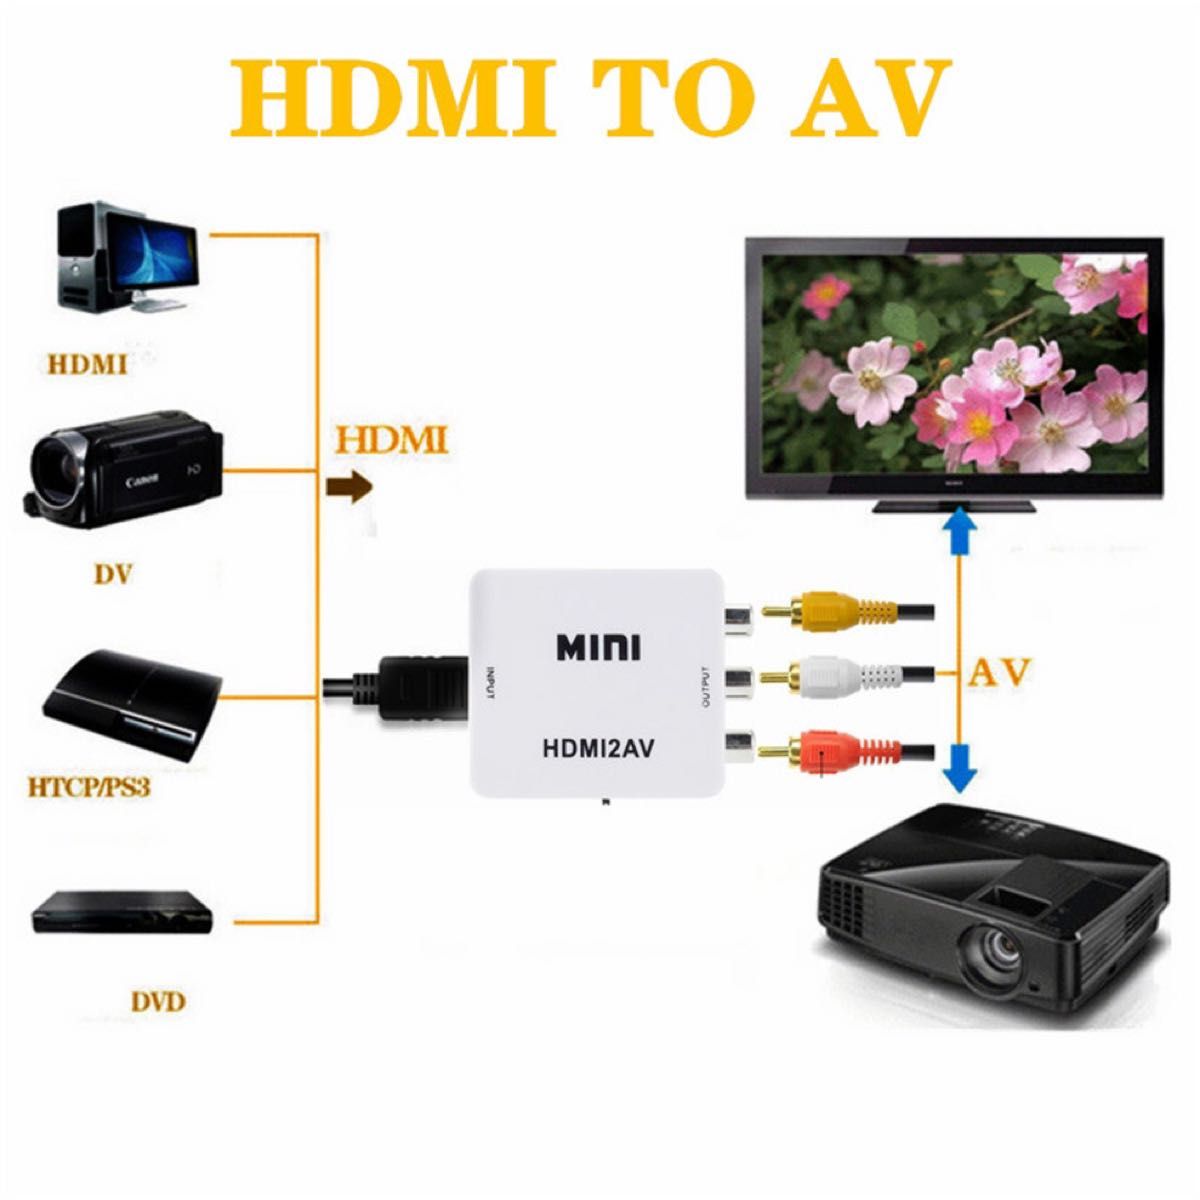 HDMI→RCA変換器　AVコンバーター